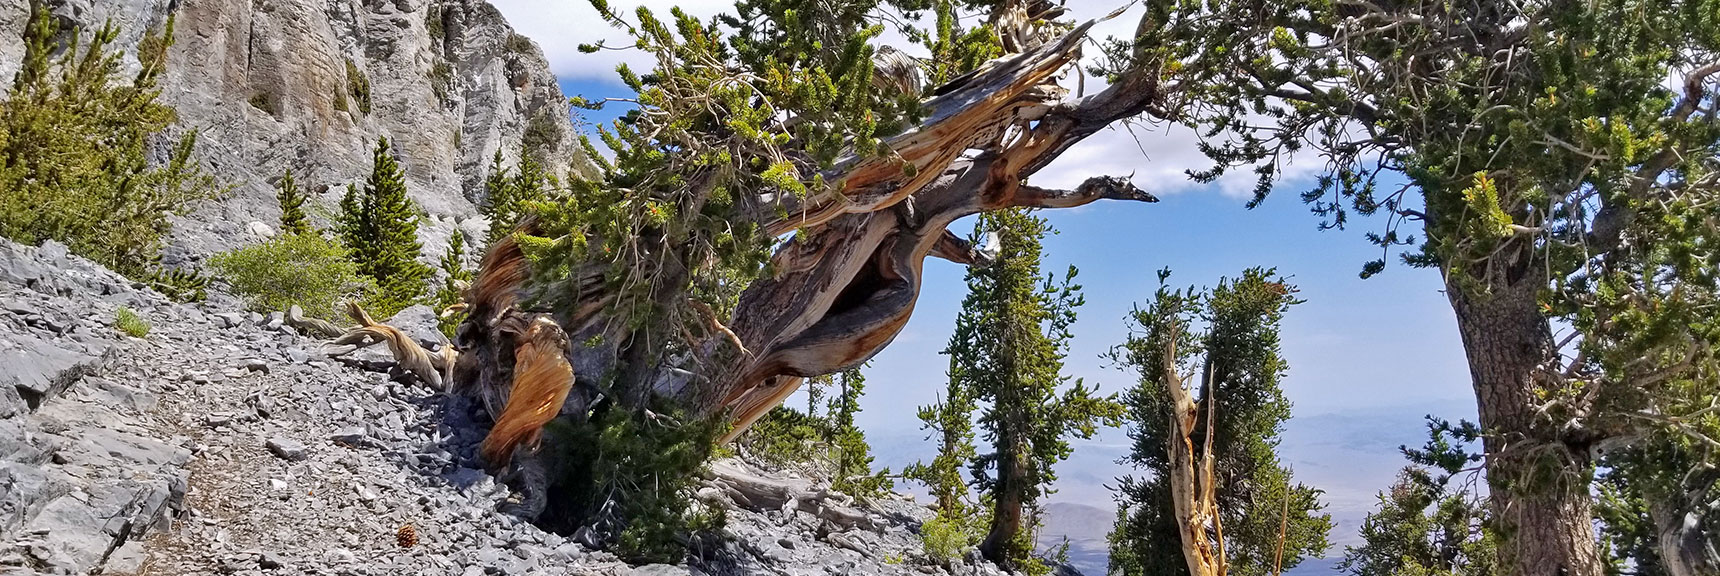 Bristlecone Pines Arising from Granite Rock of Mummy's Knees | Mummy Mountain's Knees | Mt. Charleston Wilderness, Nevada 023